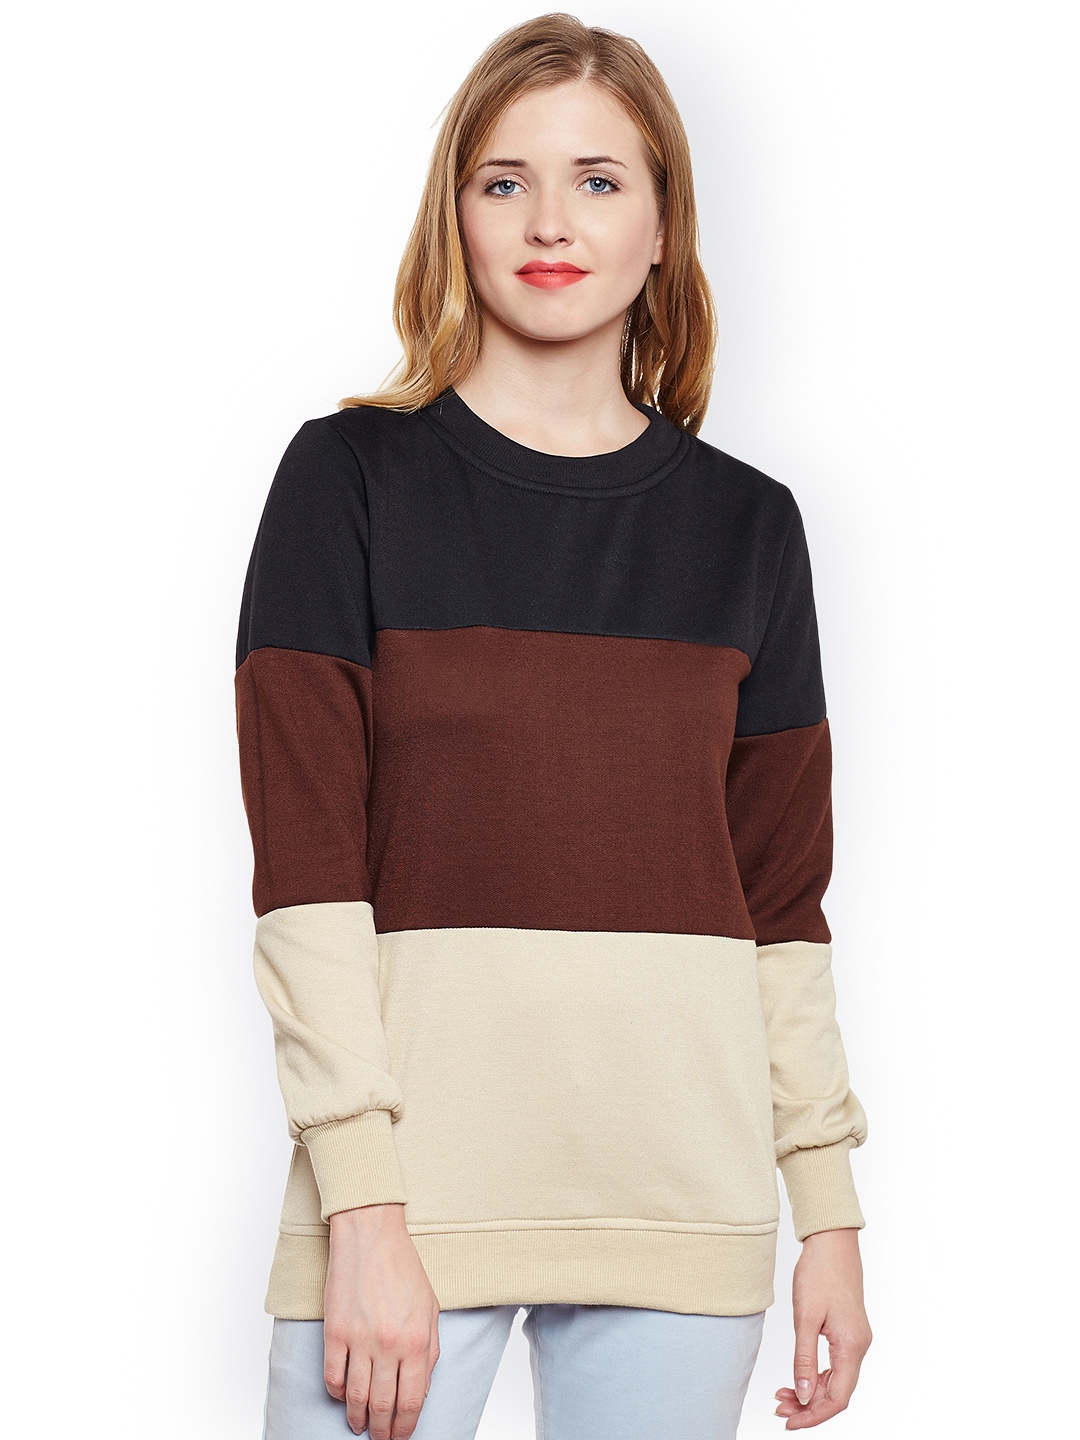 Belle Fille Women Black & Brown Colourblocked Sweatshirt Price in India